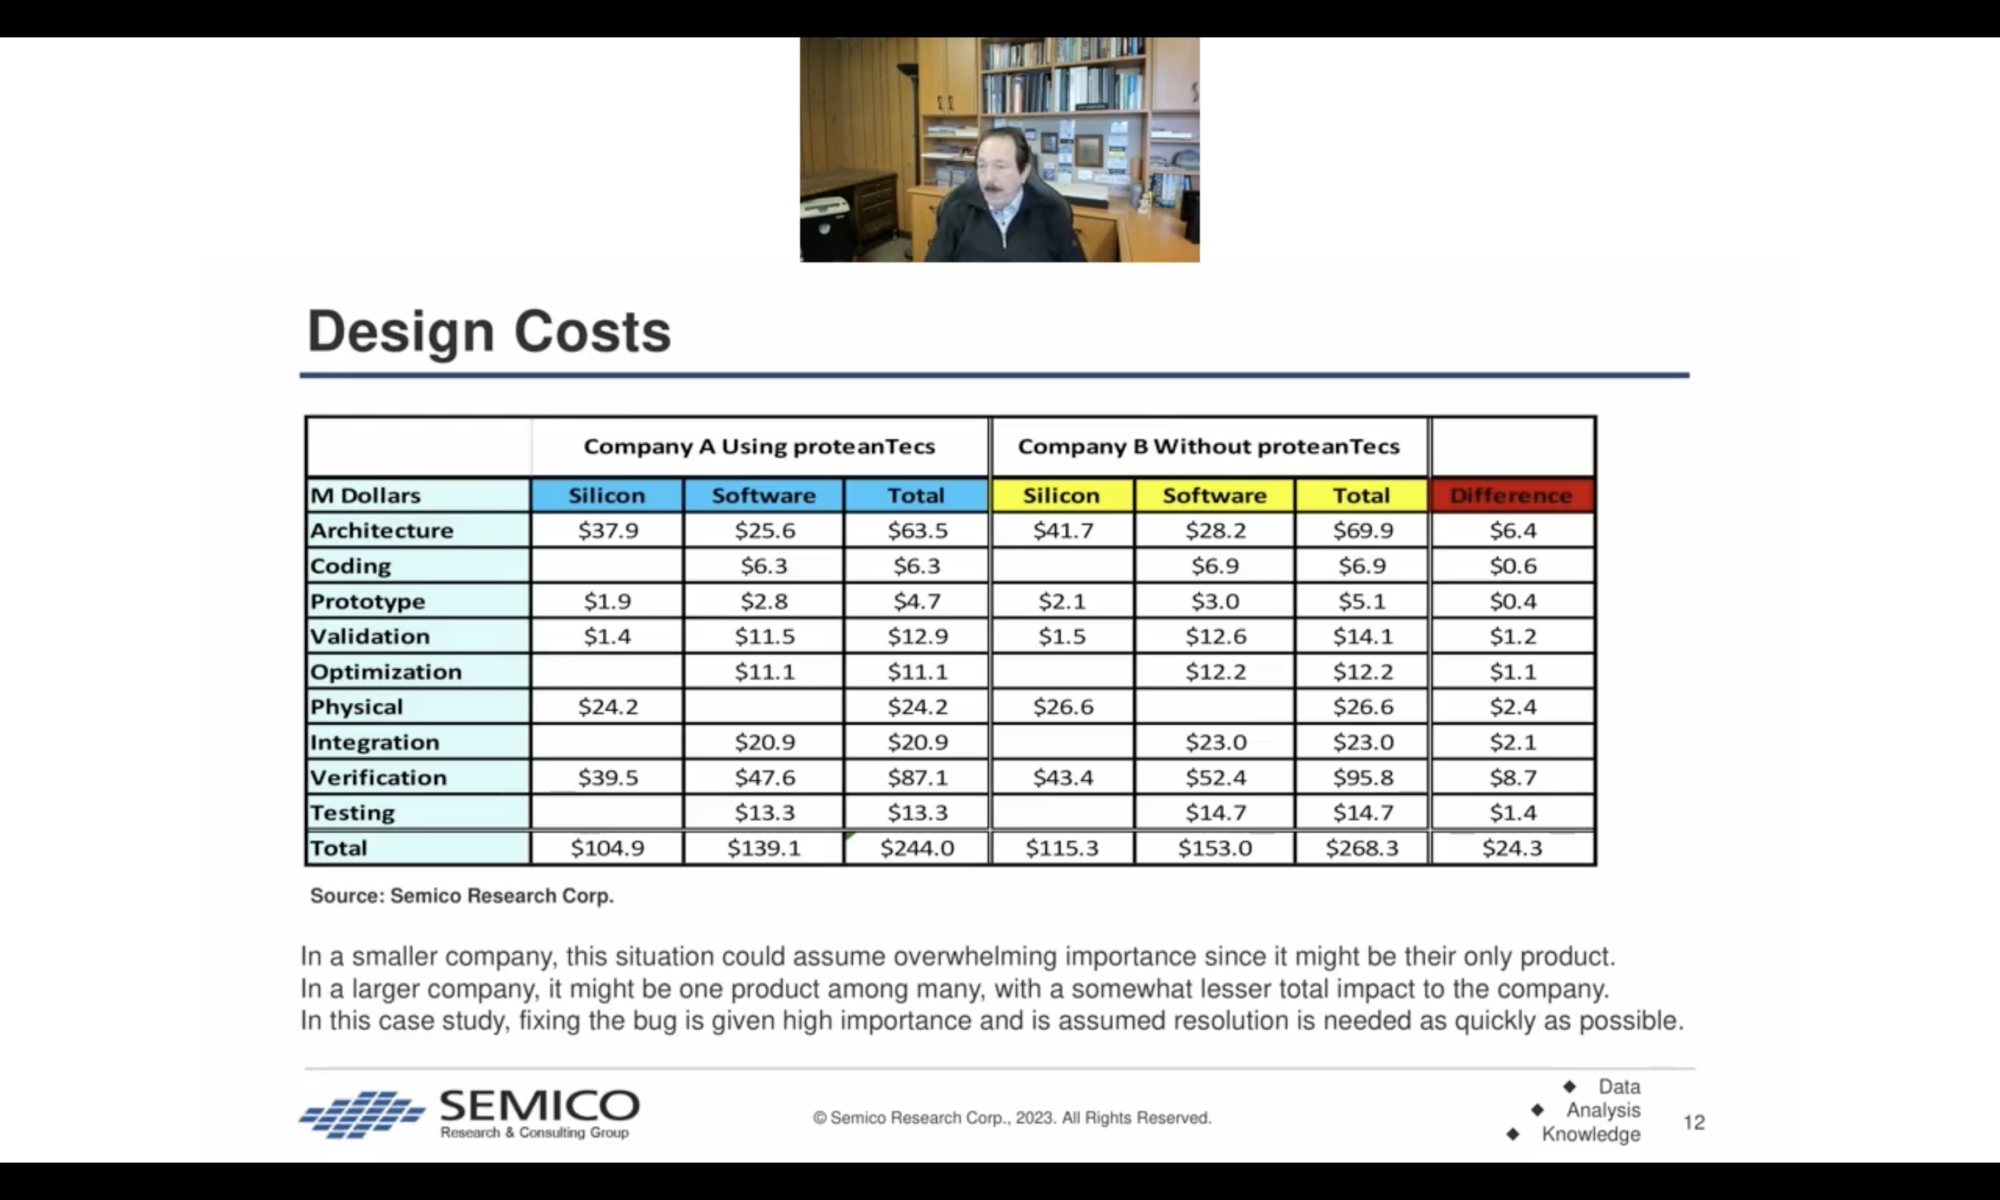 Design Costs Comparison